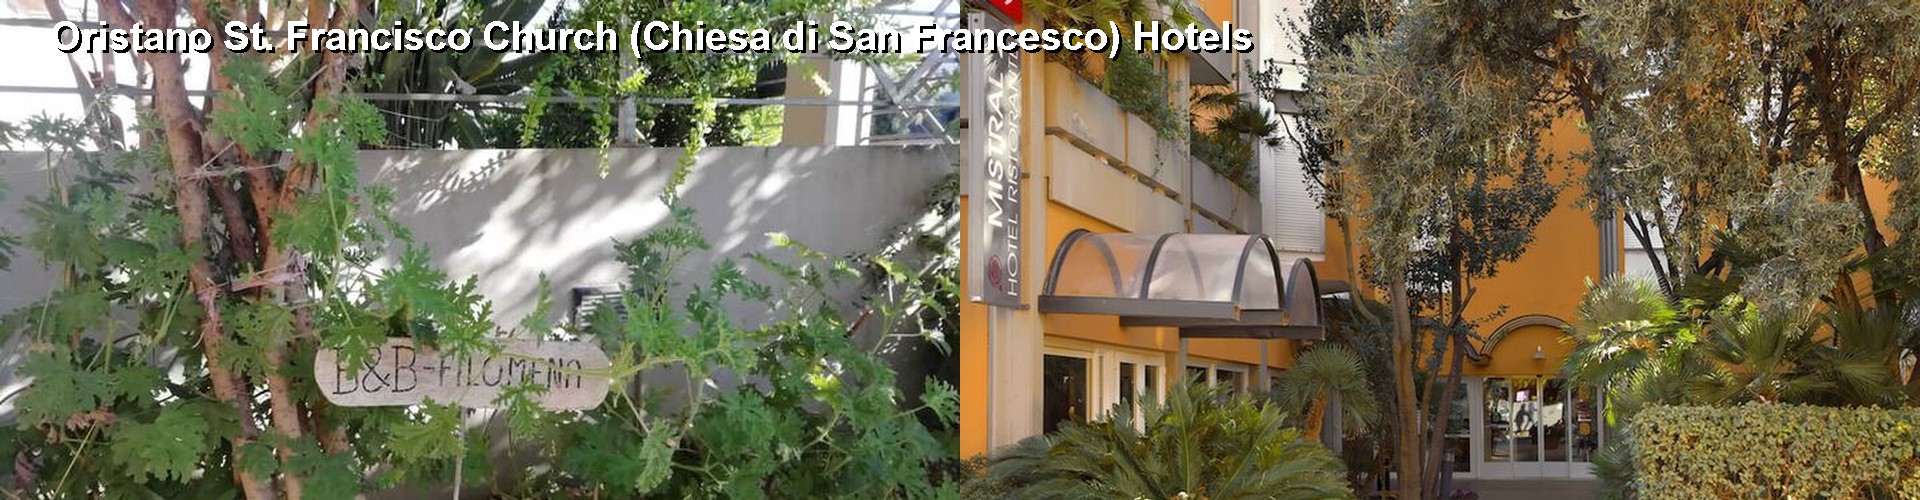 3 Best Hotels near Oristano St. Francisco Church (Chiesa di San Francesco)